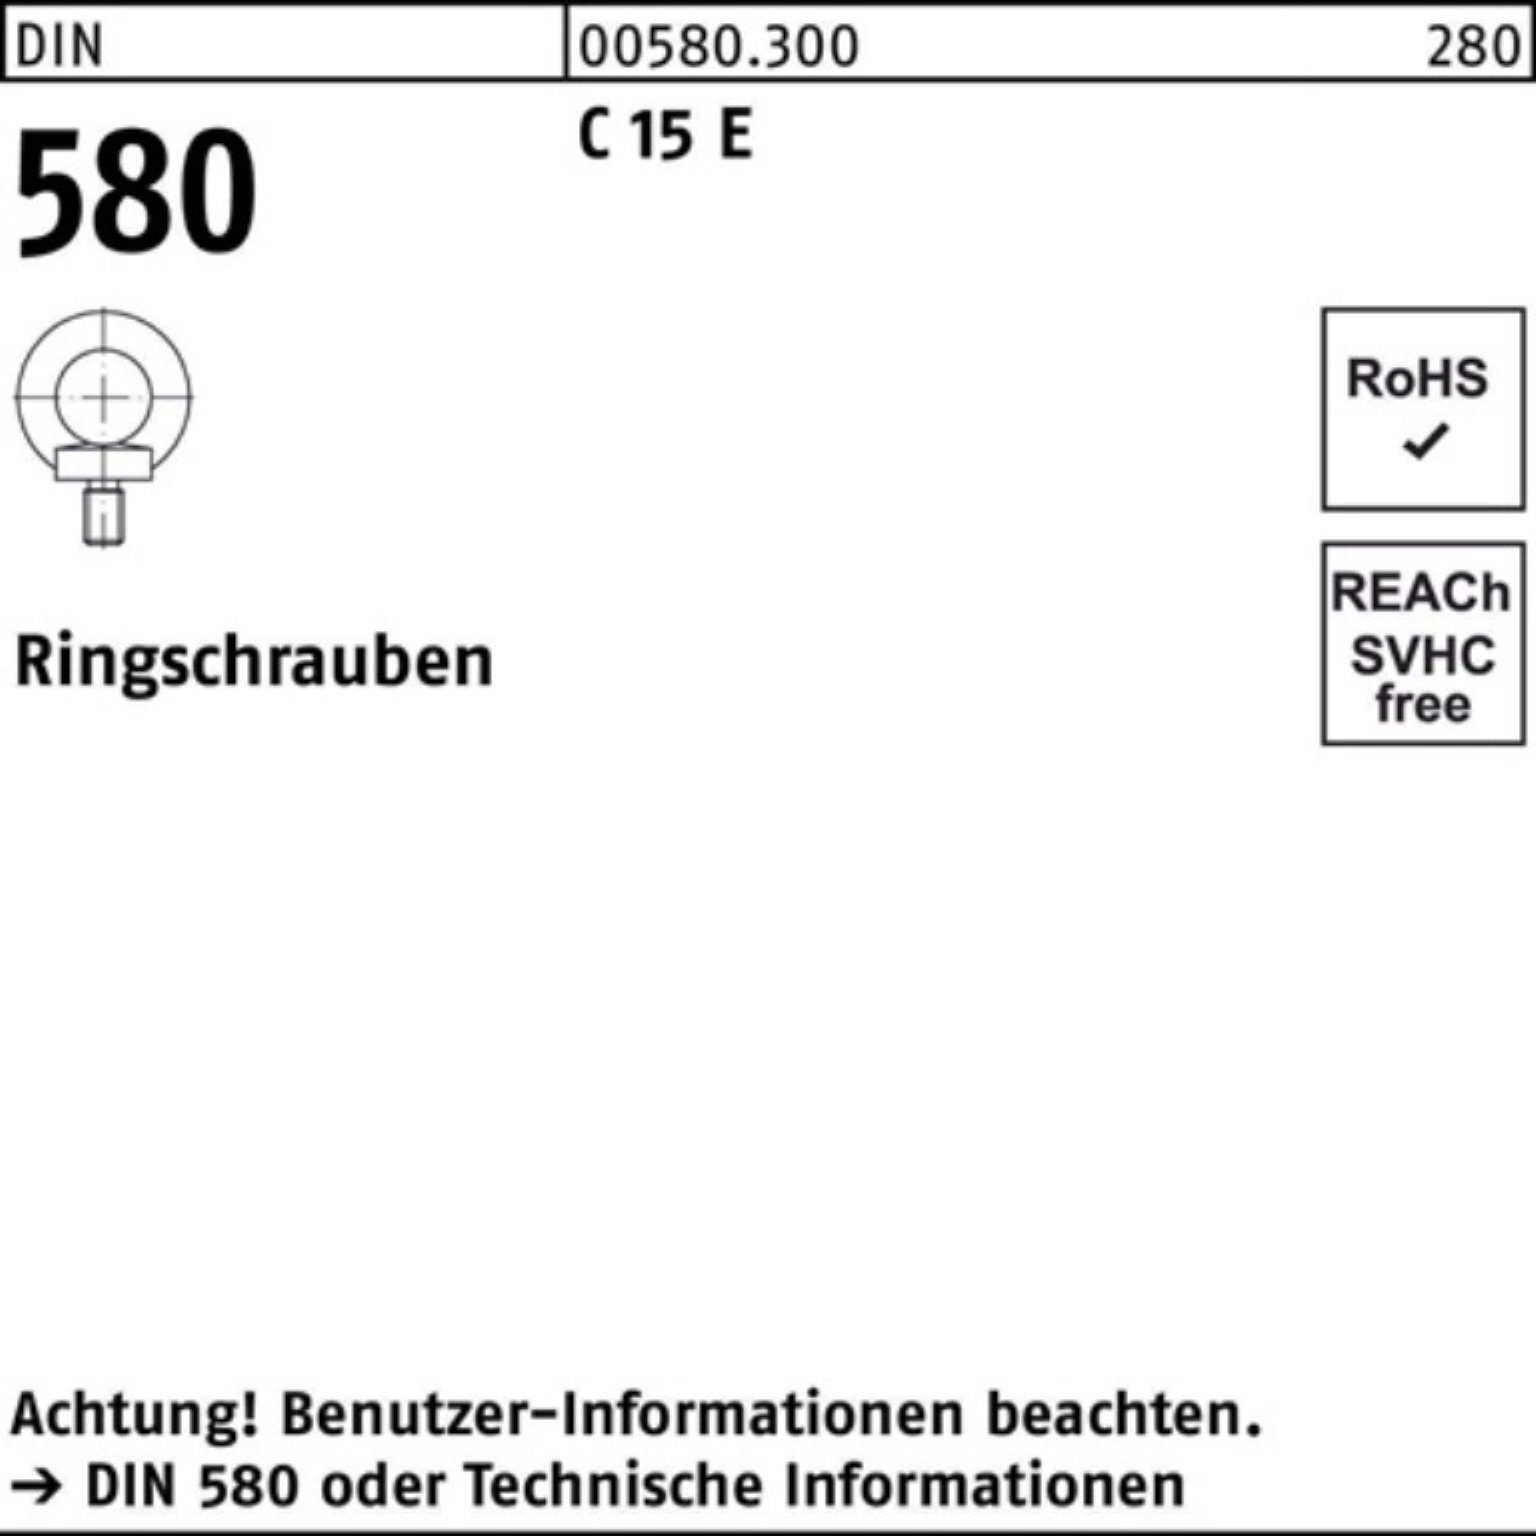 Reyher Schraube 100er Pack Ringschraube DIN 580 M52 C 15 E 1 Stück DIN 580 C 15 E Rin